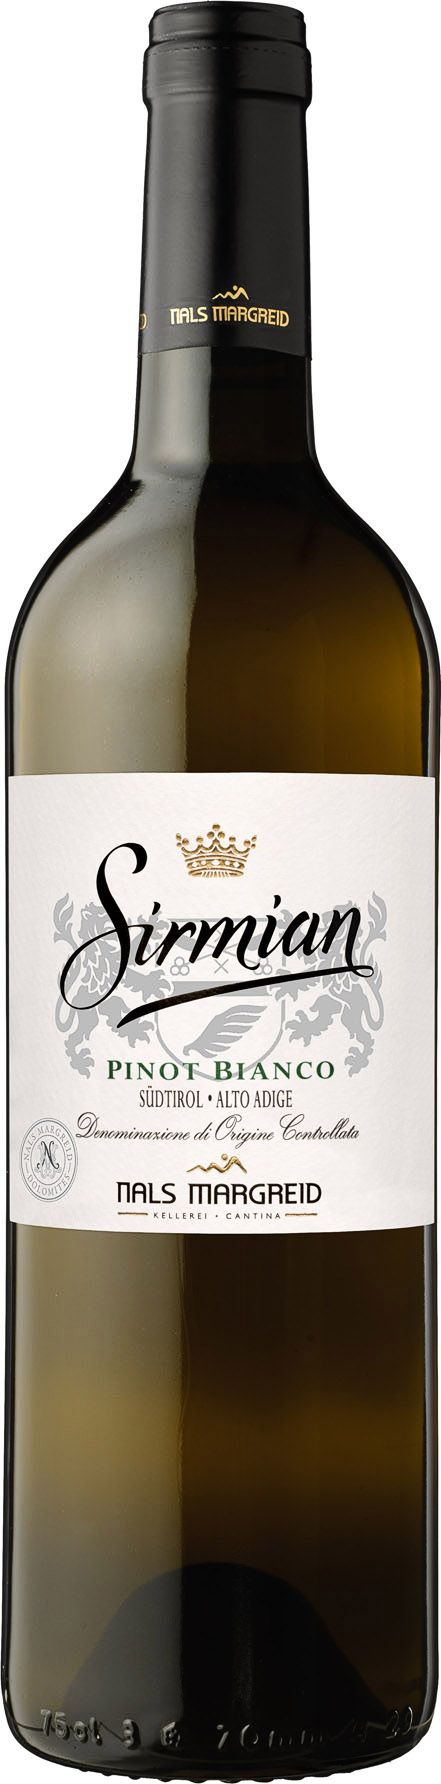 Nals Margreid, Sirmian Pinot Blanco, 2011